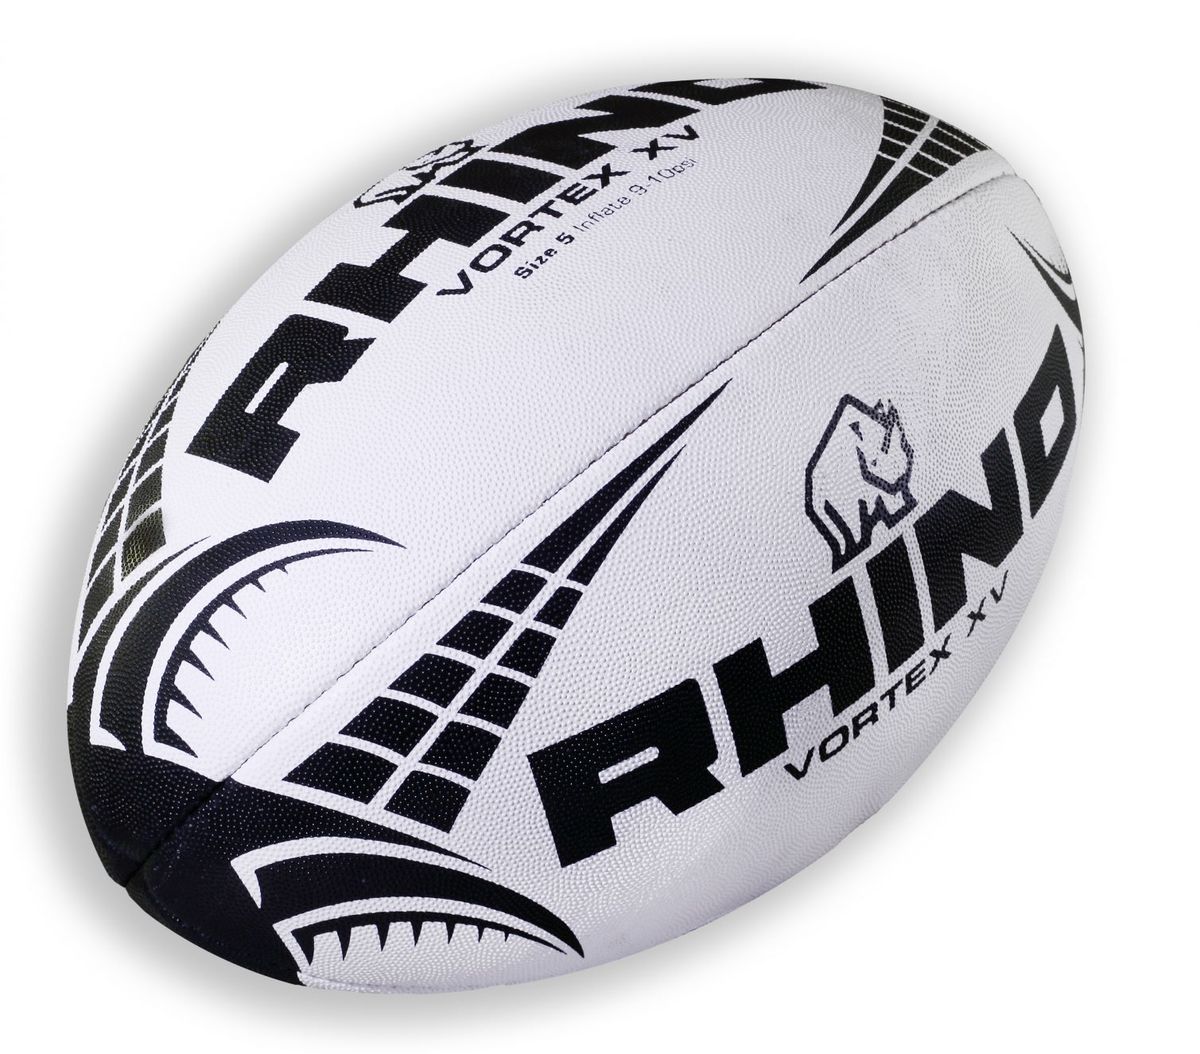 Rhino Vortex XV Match Ball - Size 5, Shop Today. Get it Tomorrow!